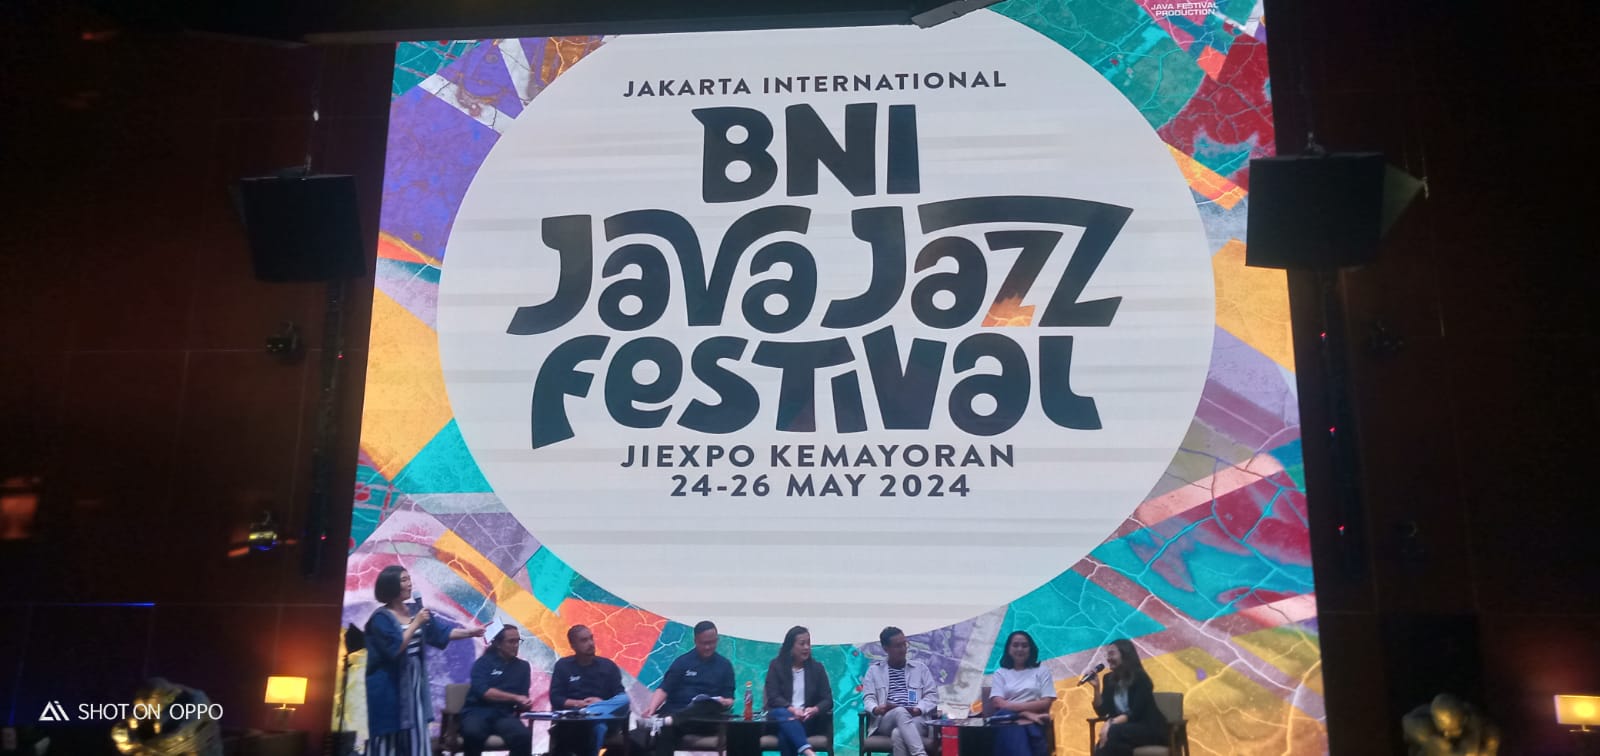 Merangkul Persatuan Lewat Musik di Jakarta International BNIJava Jazz Edisi ke 19